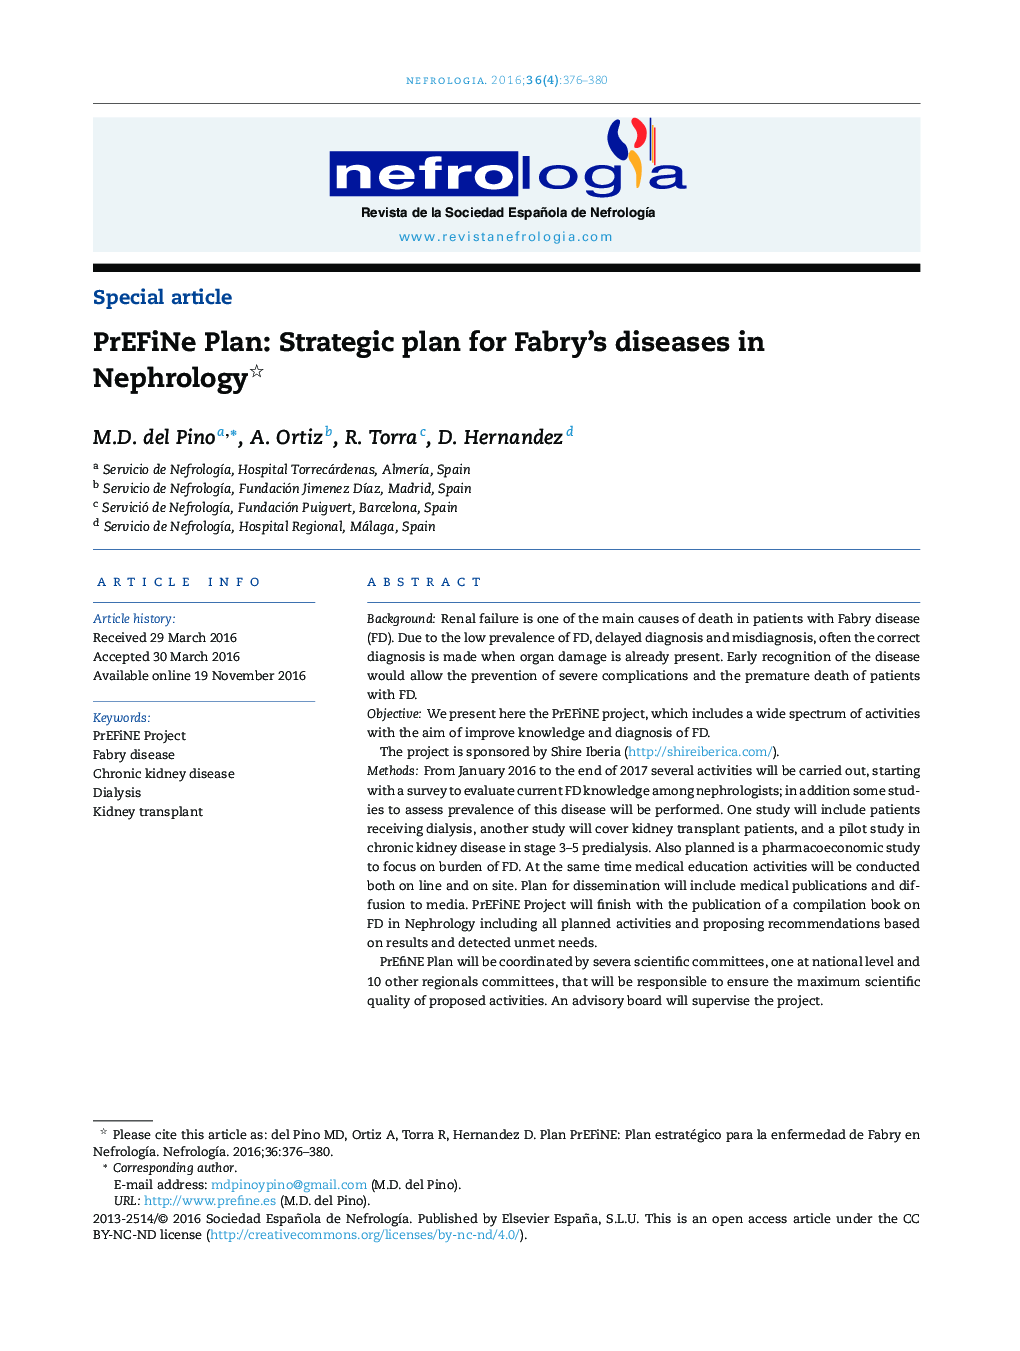 PrEFiNe Plan: Strategic plan for Fabry's diseases in Nephrology